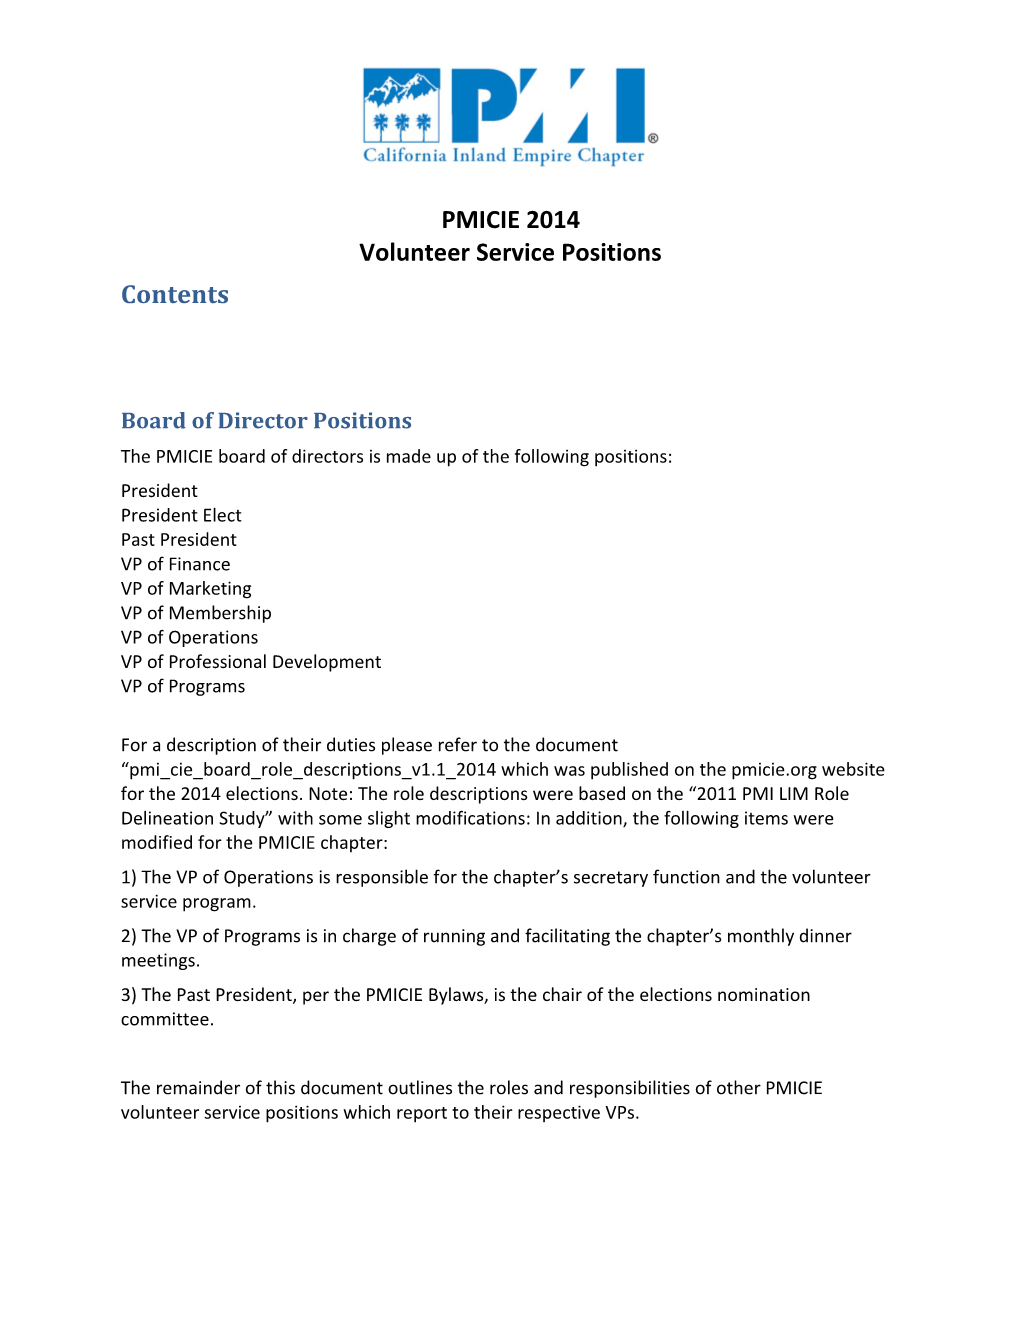 Volunteer Service Positions 2014